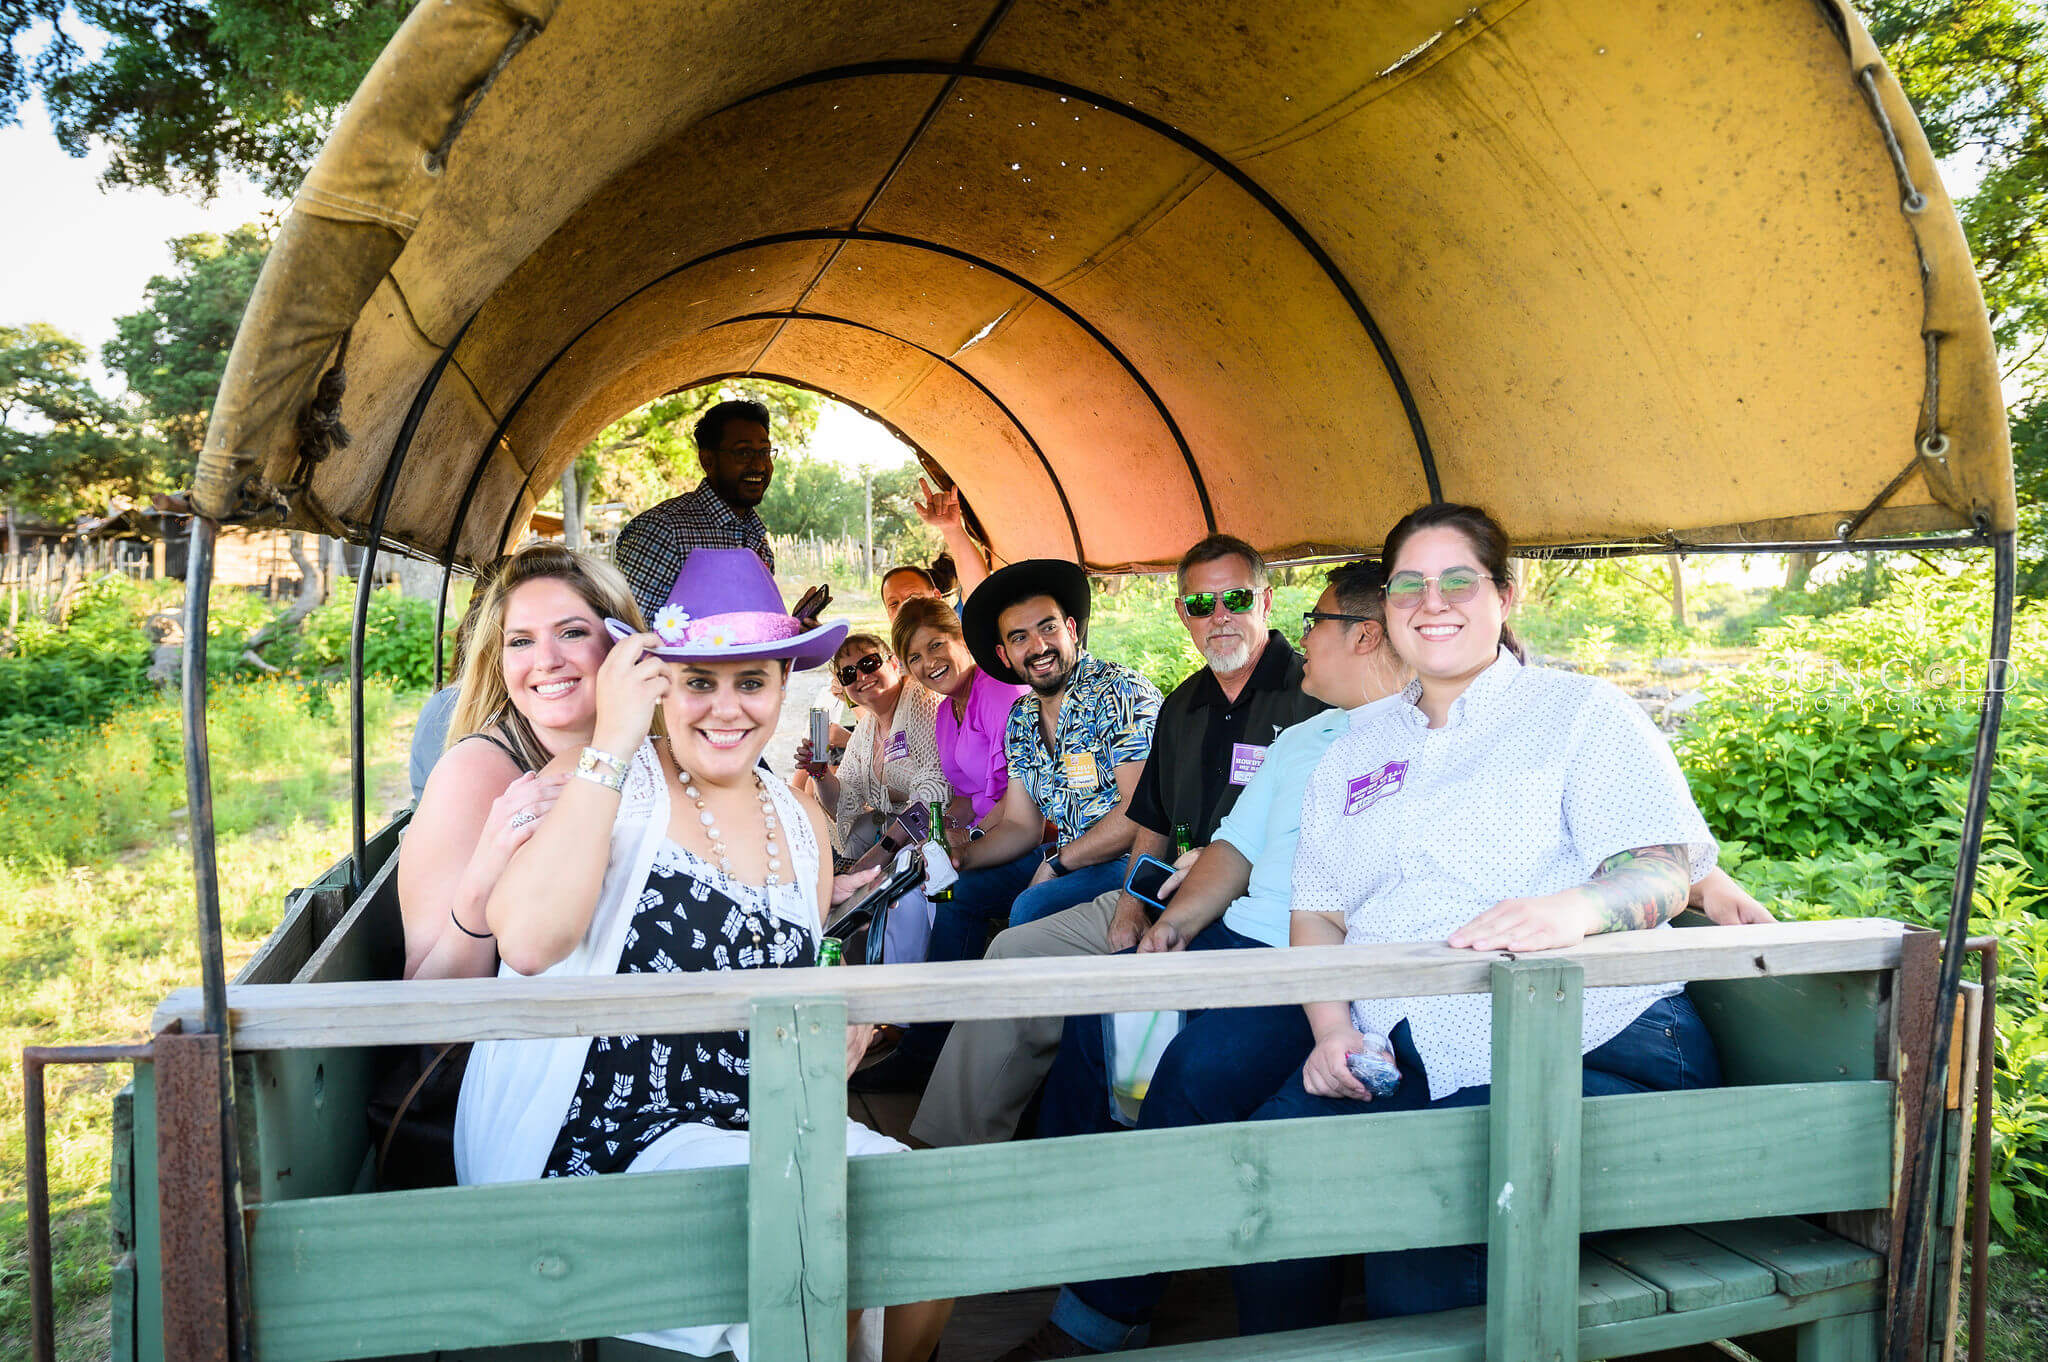 Corporate group enjoying wagon rides at Enchanted Springs Ranch! Photo courtesy of Sun Gold Photography.